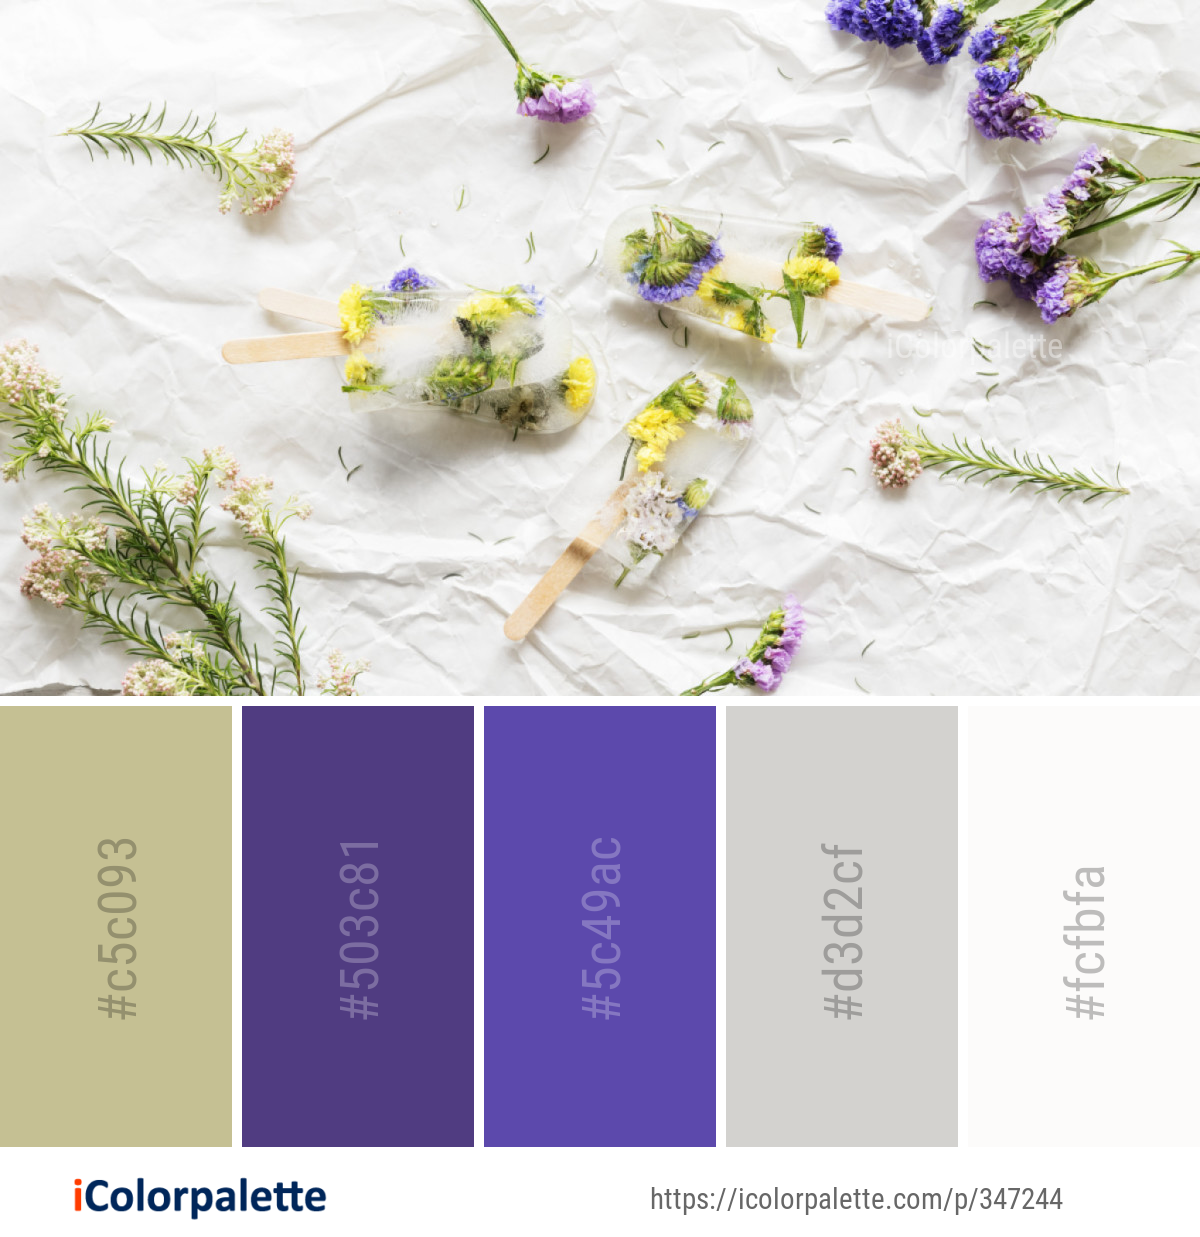 Color Palette Ideas from Flower Lavender Arranging Image